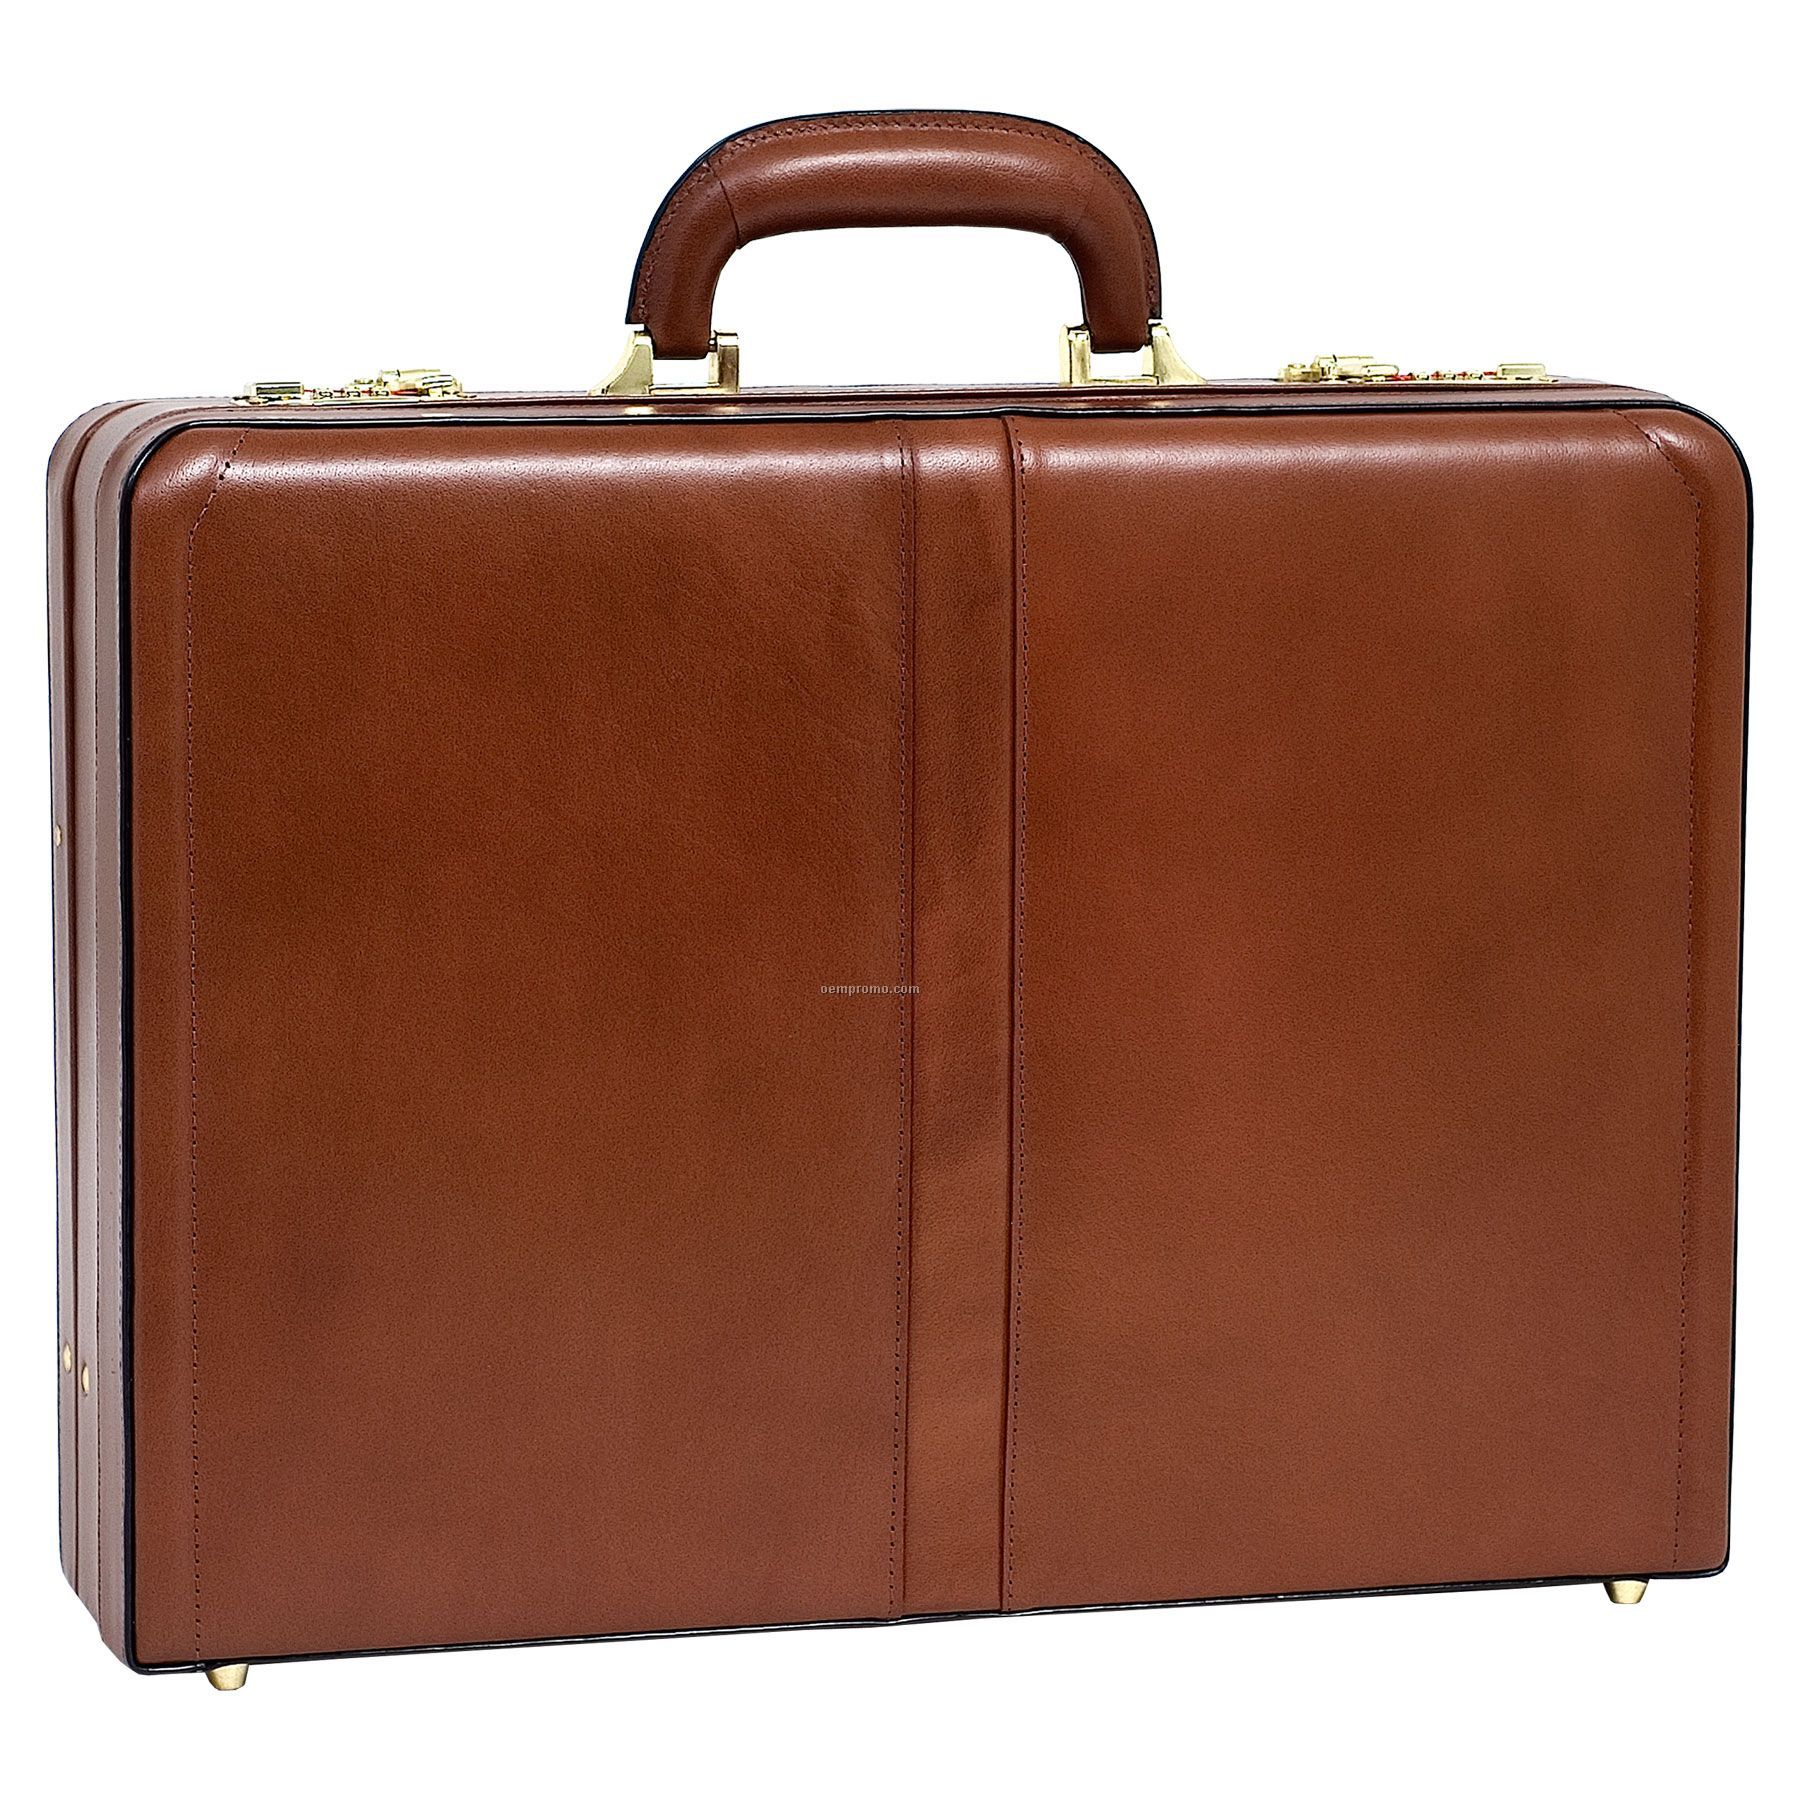 Harper Leather Expandable Attache Case - Brown